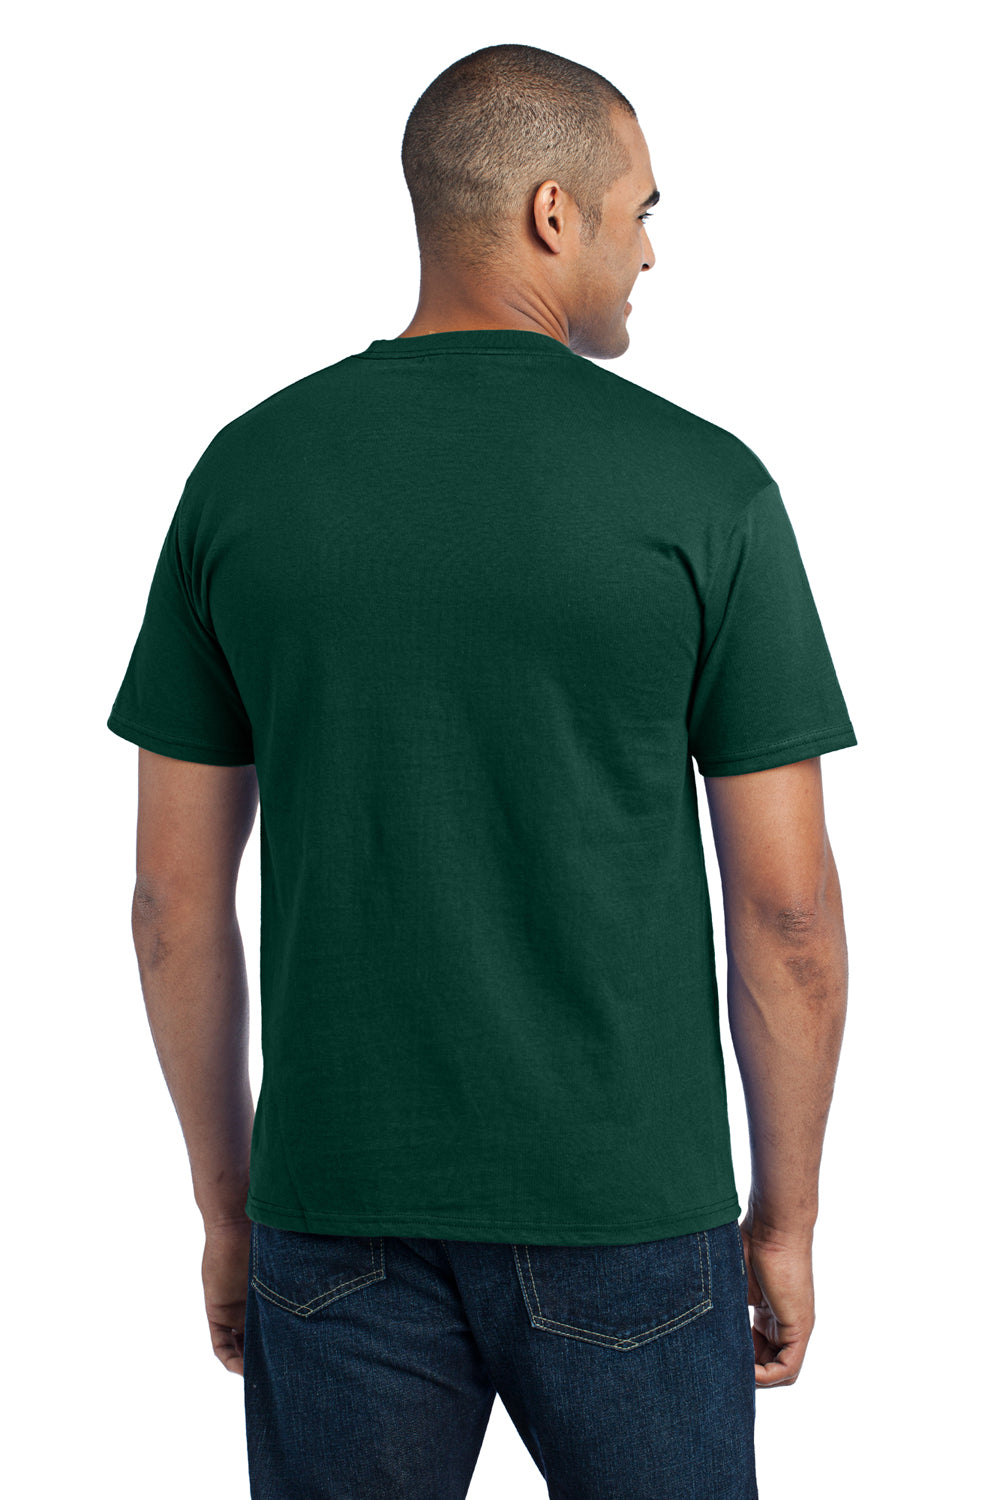 Port & Company PC55P Mens Core Short Sleeve Crewneck T-Shirt w/ Pocket Dark Green Back